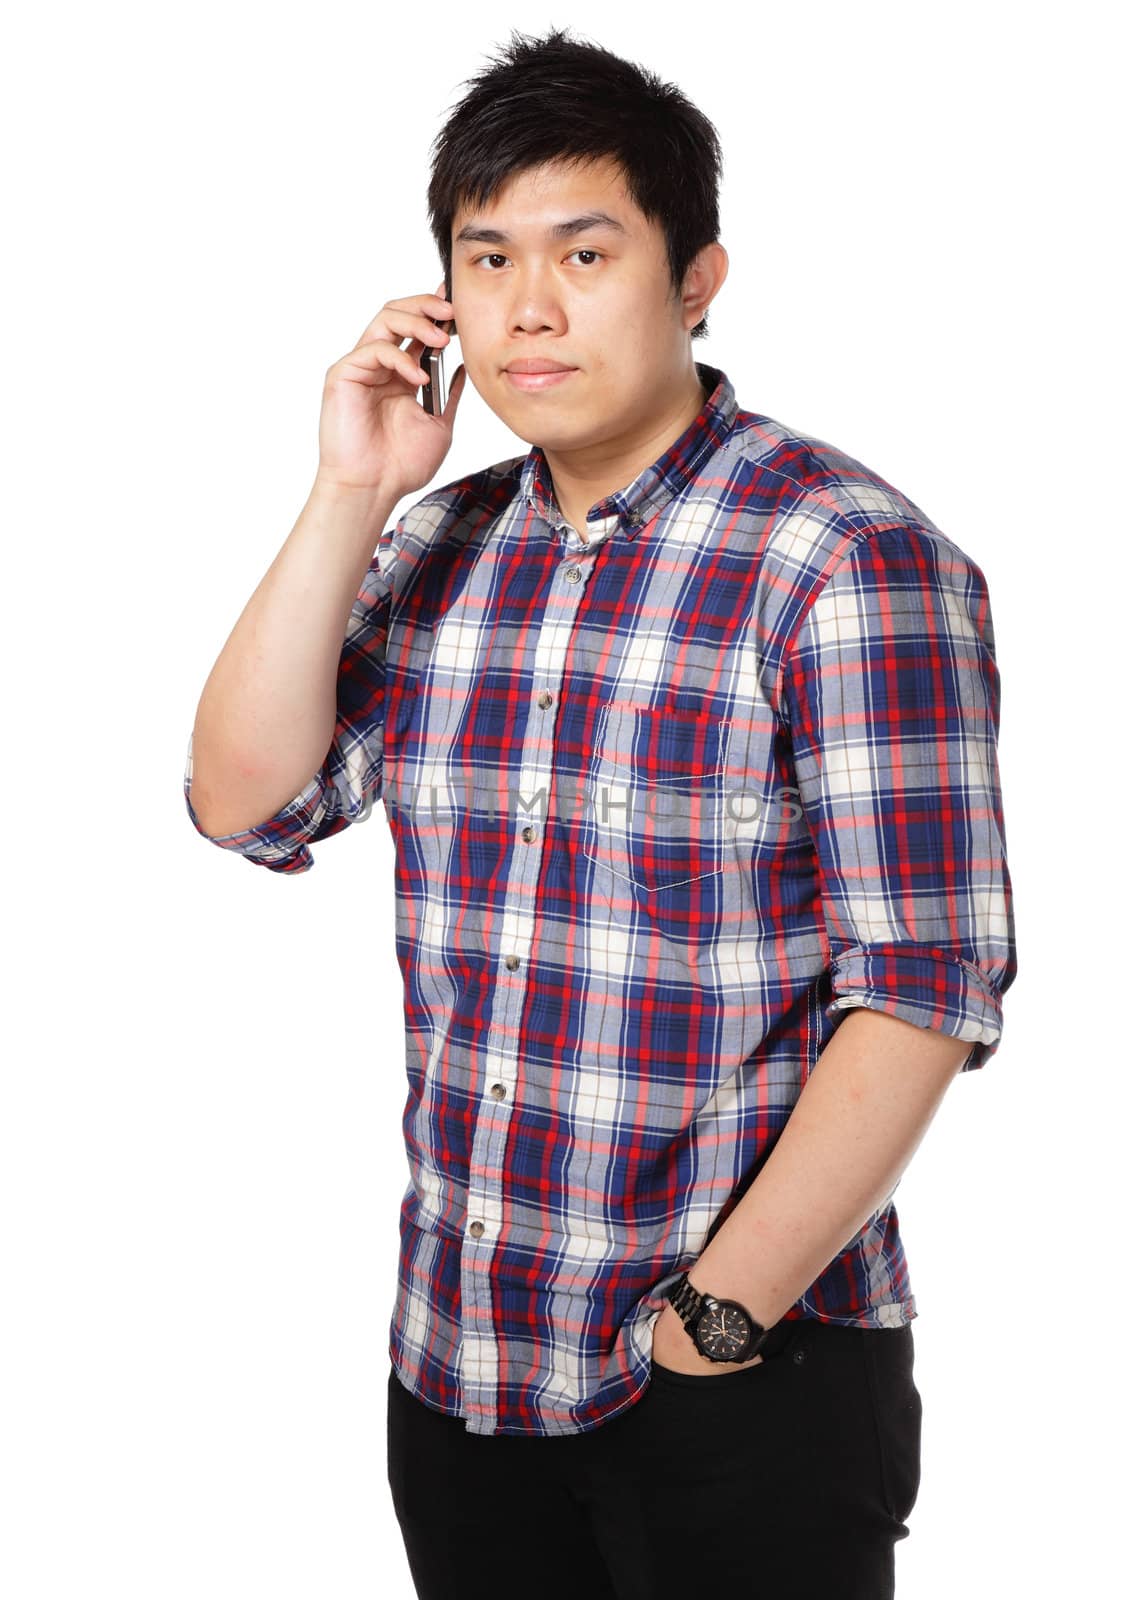 man talk on phone by leungchopan